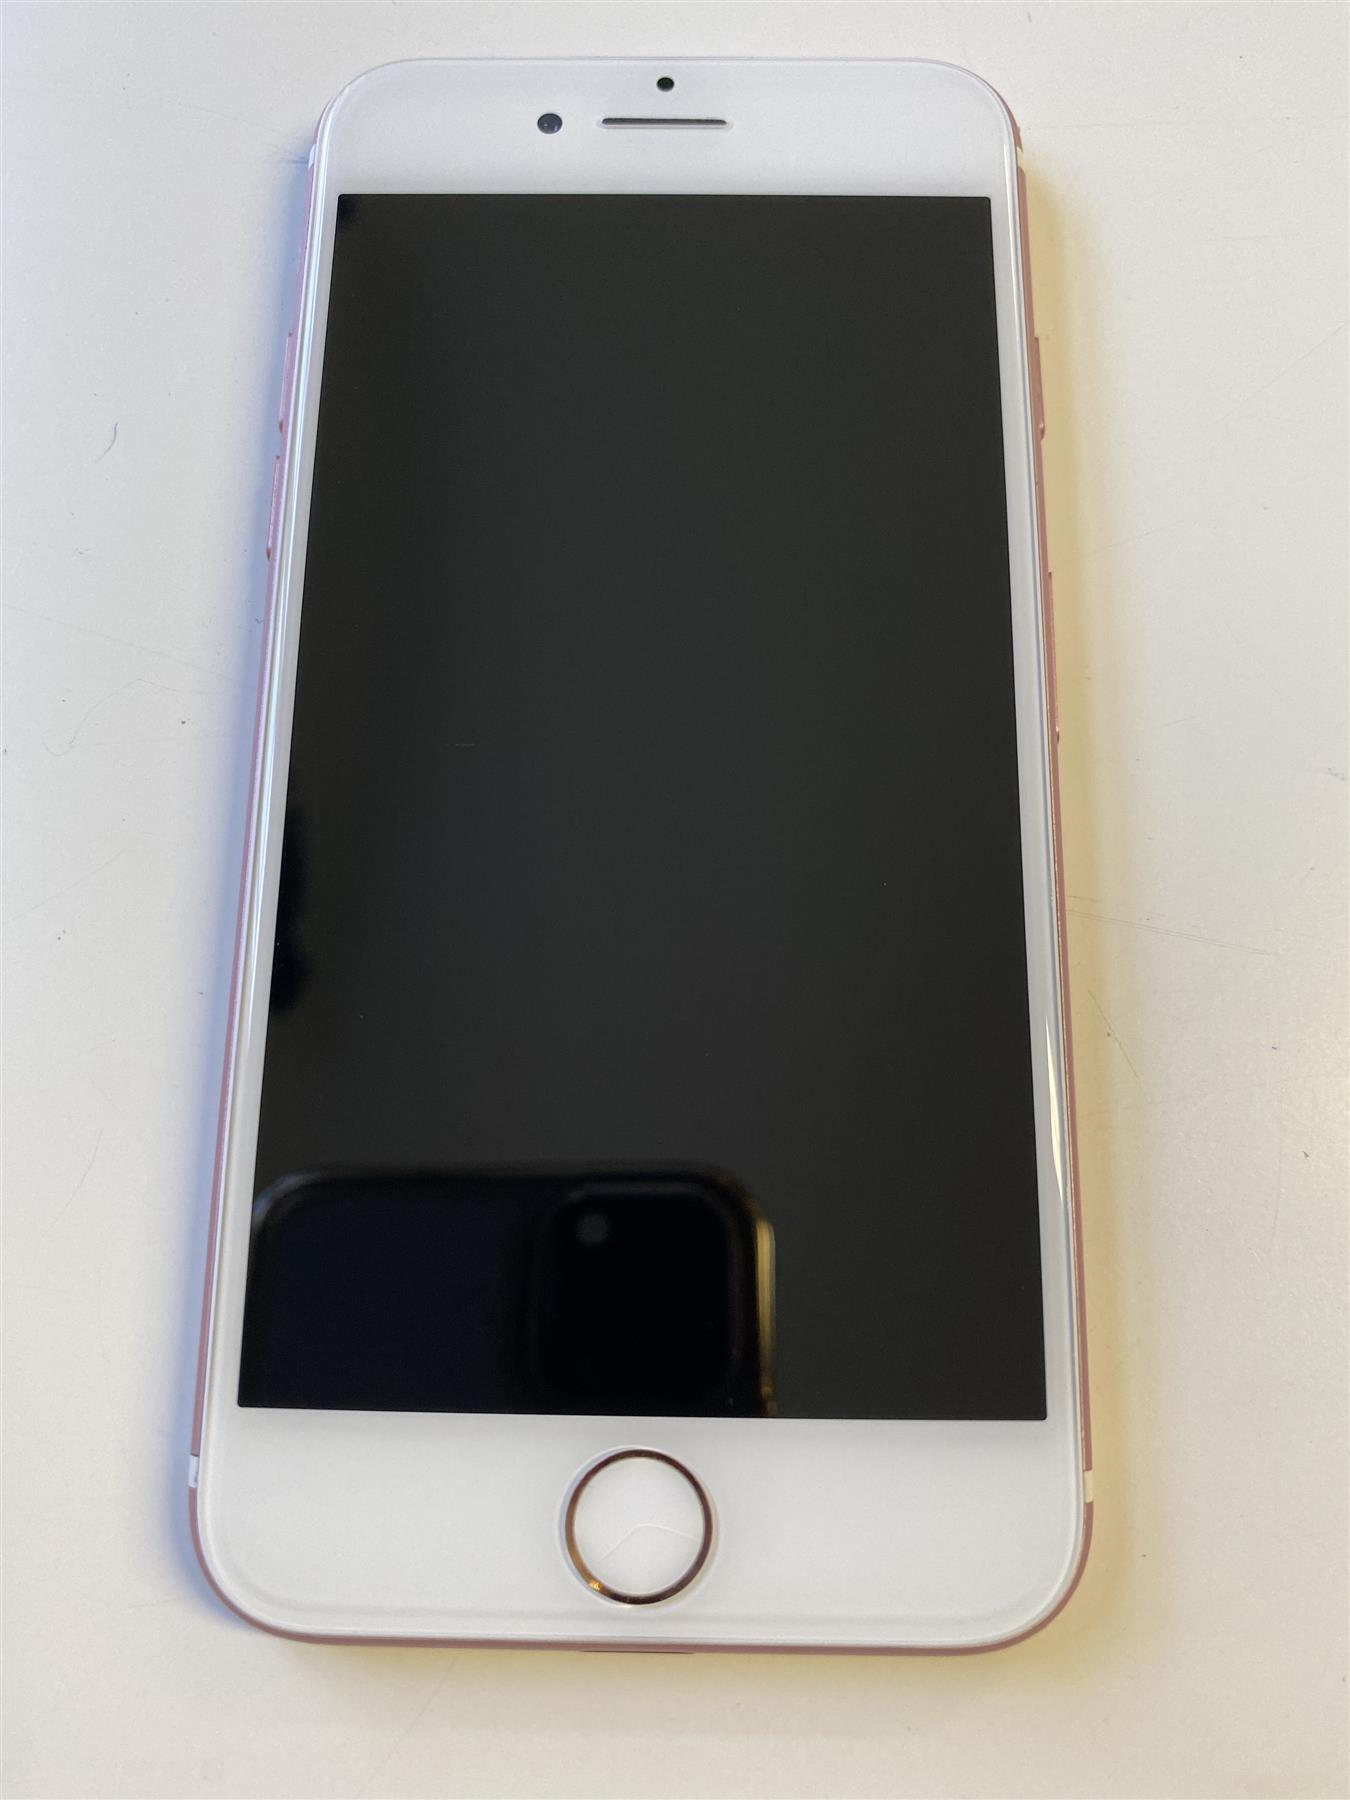 Apple iPhone 7 128GB Rose Gold Unlocked - Used